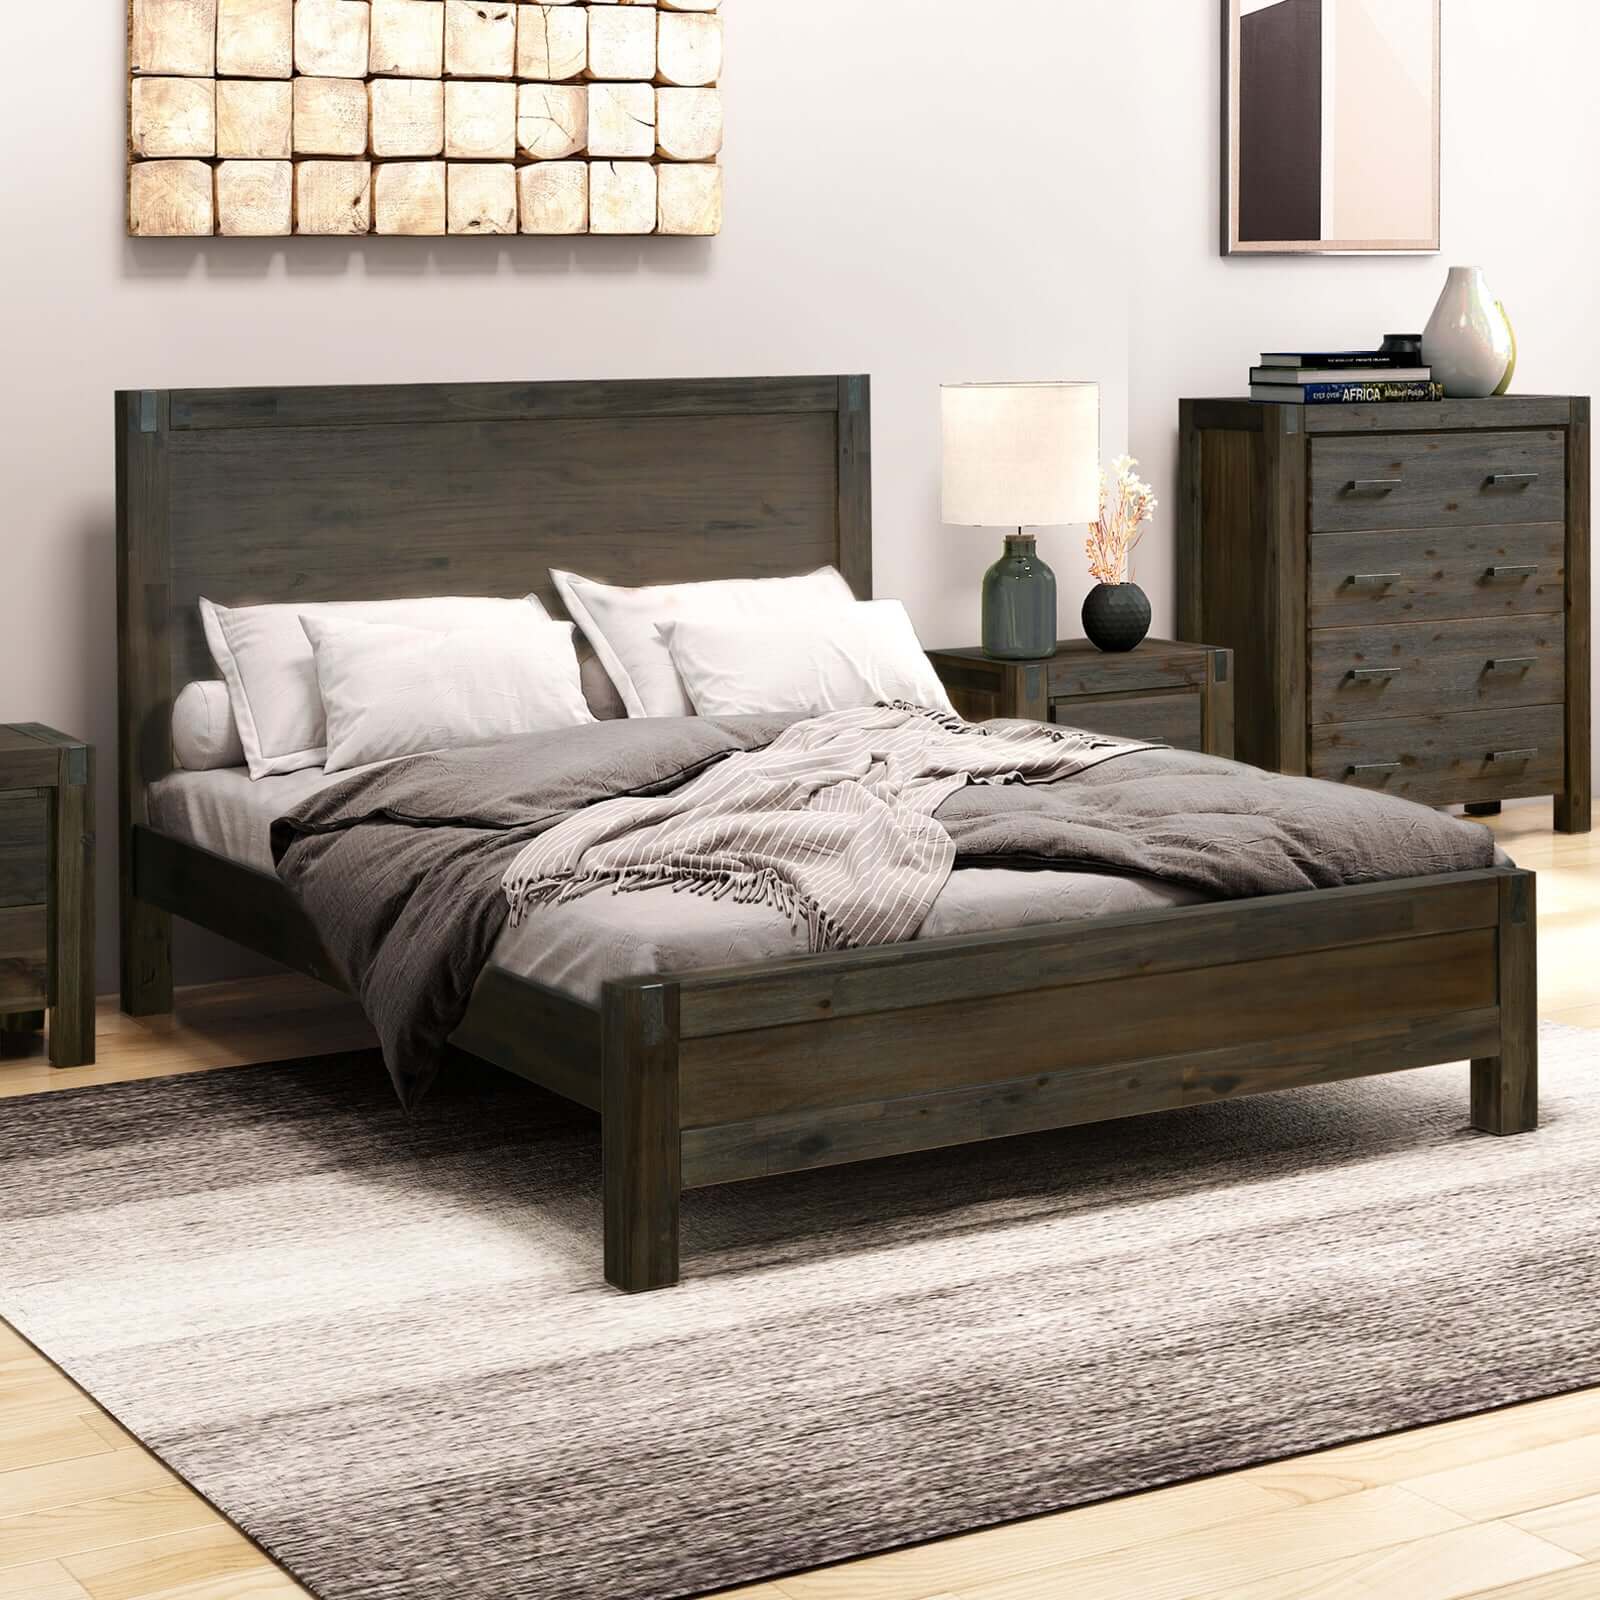 Buy bed frame king size in solid wood veneered acacia bedroom timber slat in chocolate - upinteriors-Upinteriors